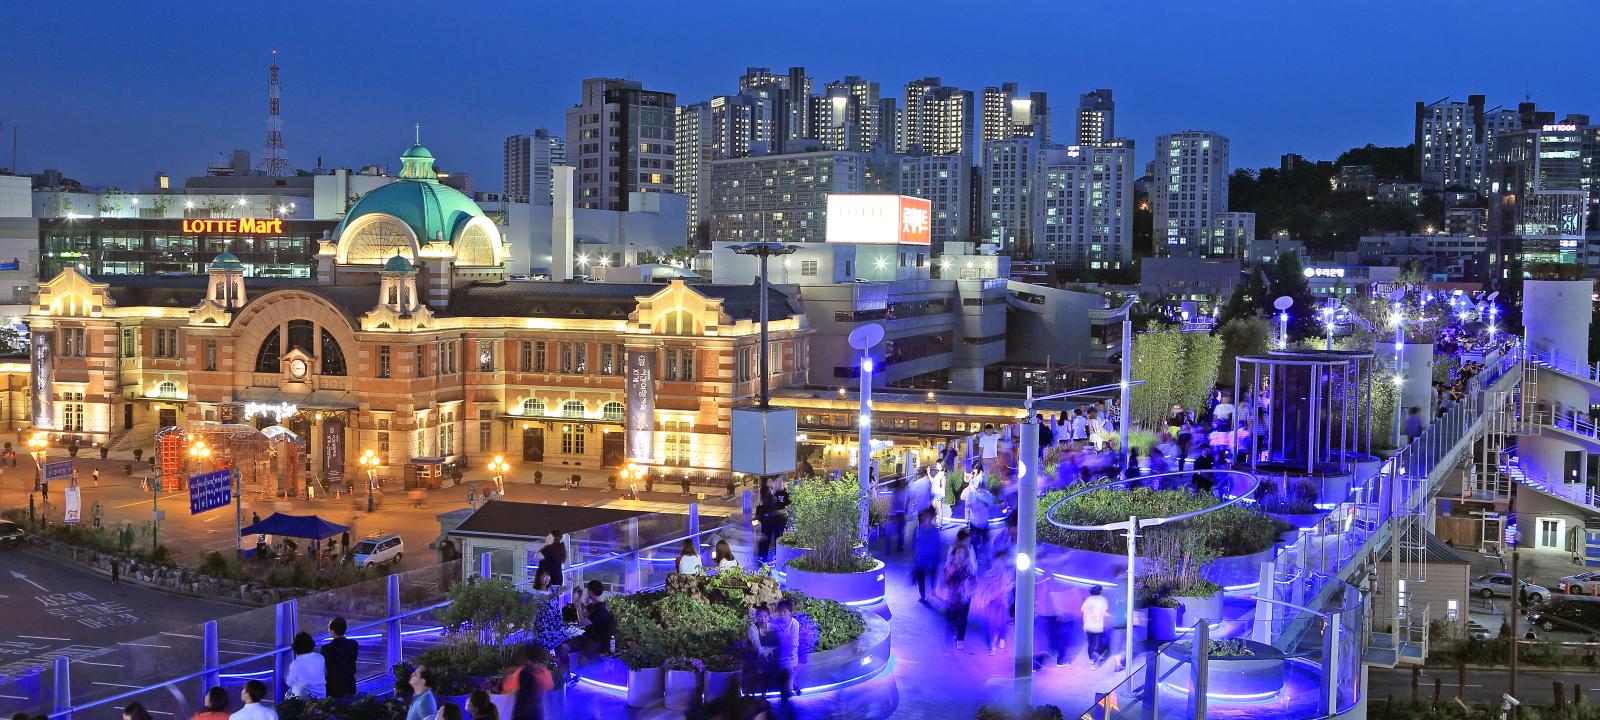 Illuminated roof garden in the city at night